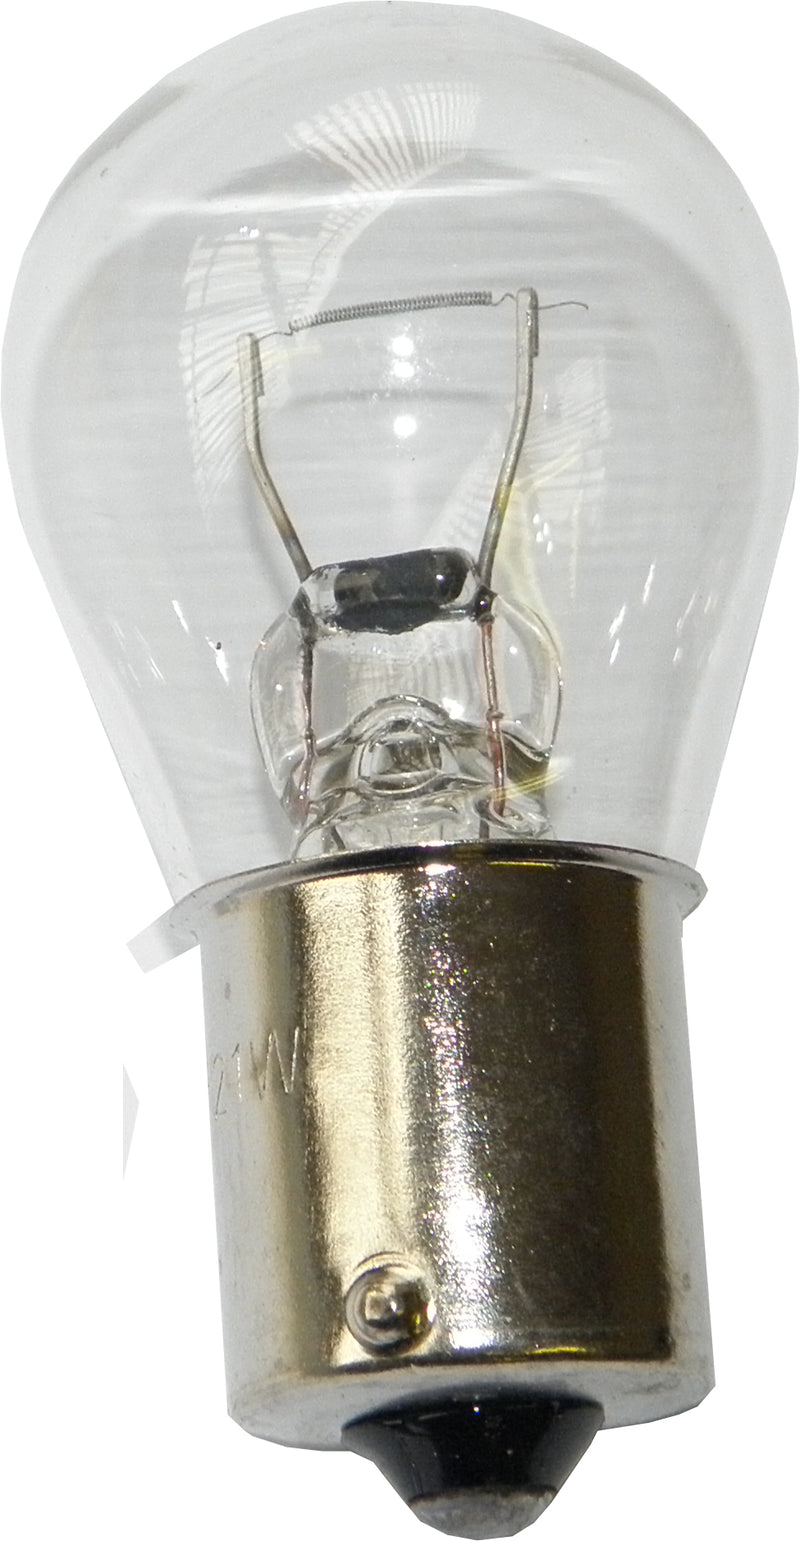 Ama Bulb - Single Contact Indicator Bulb - 24V